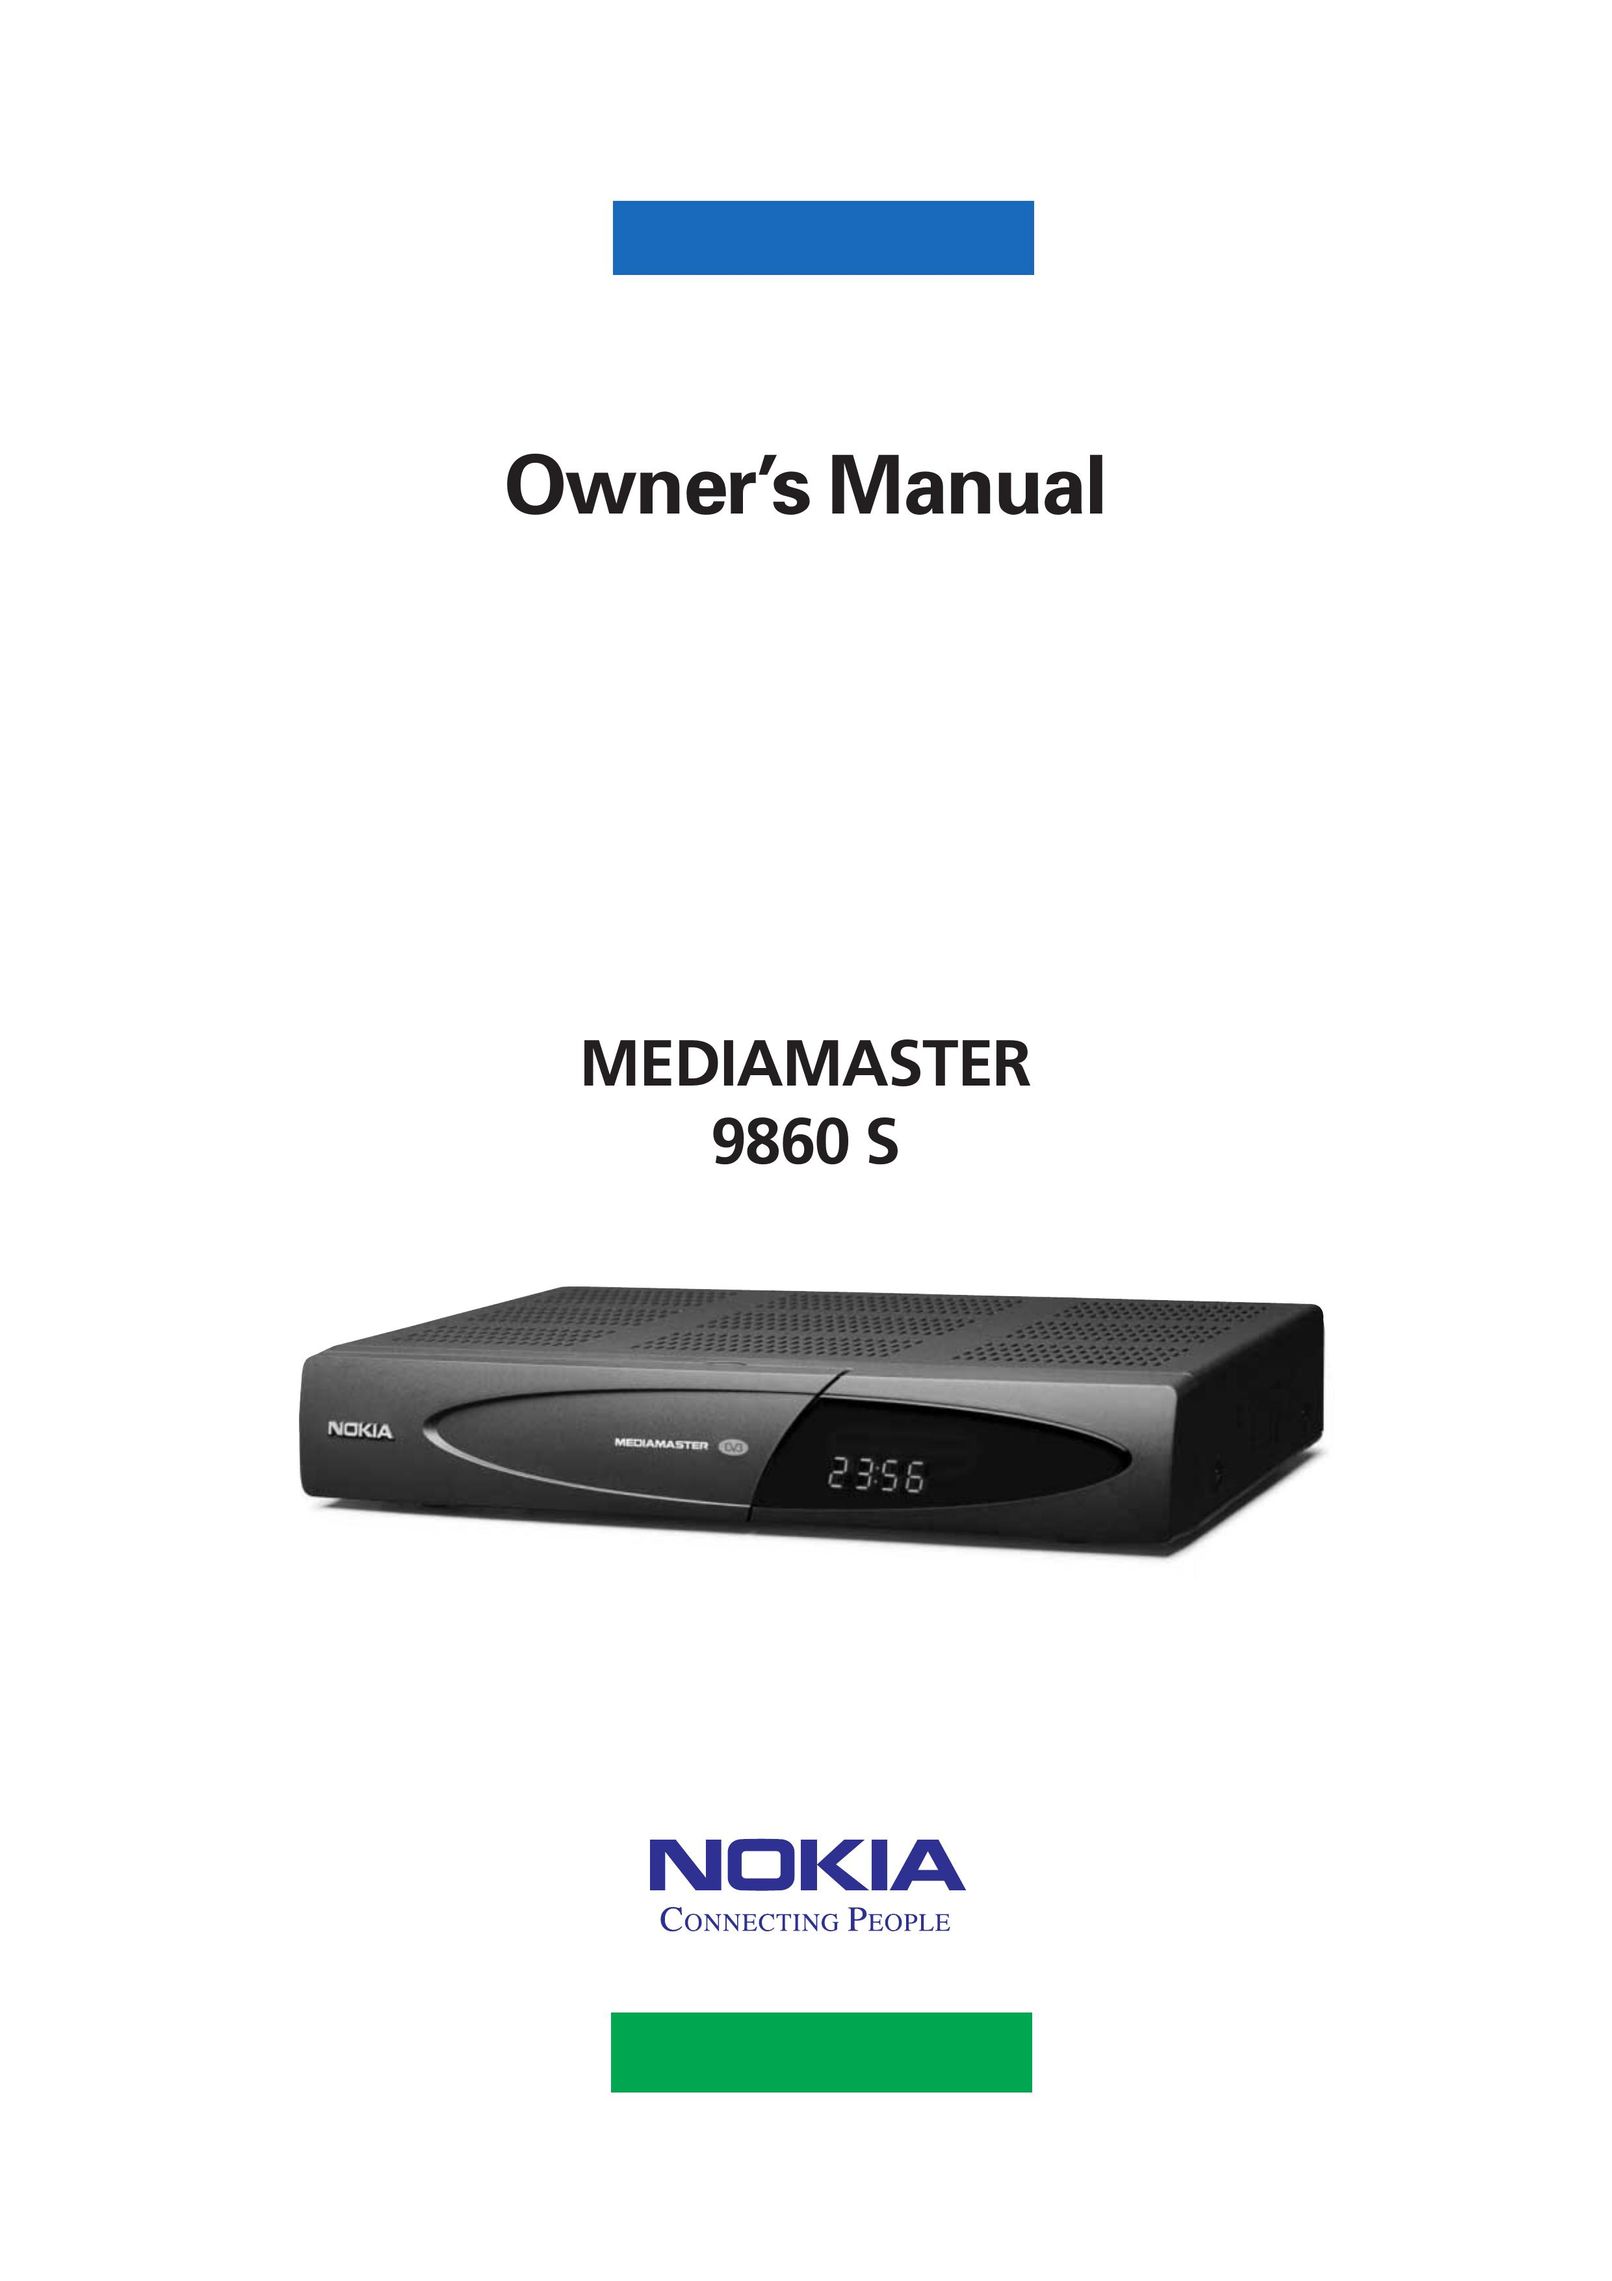 Nokia 9860 S DVR User Manual